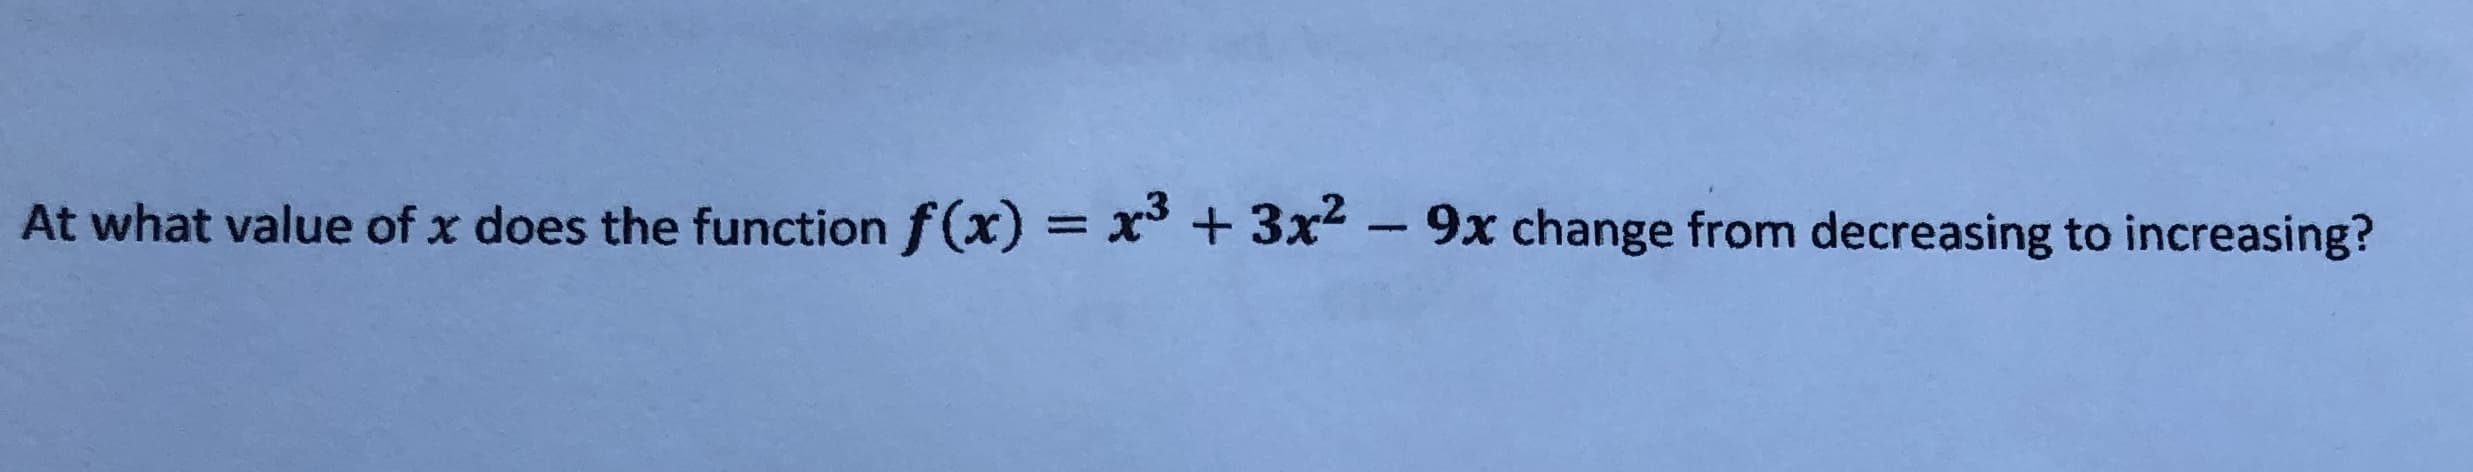 At what value of x does the function f(x) = x³ + 3x2 -9x change from decreasing to increasing?
%3D
